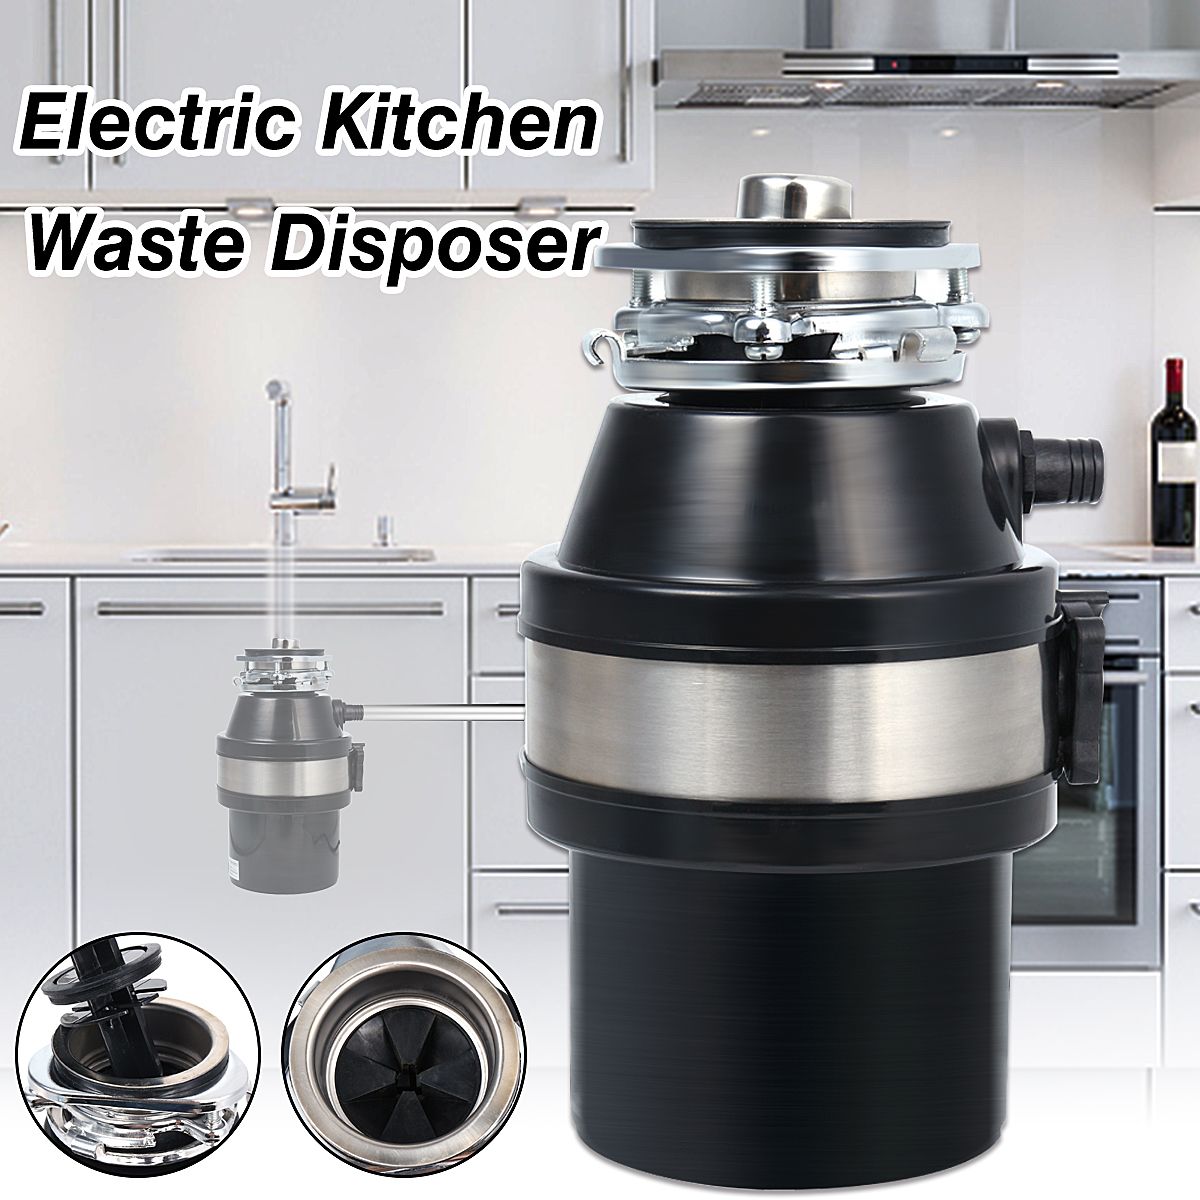 370W-220V-Waste-Disposer-Food-Garbage-Sink-Disposal-Garbage-Disposal-with-Power-Cord-US-Plug-1228098